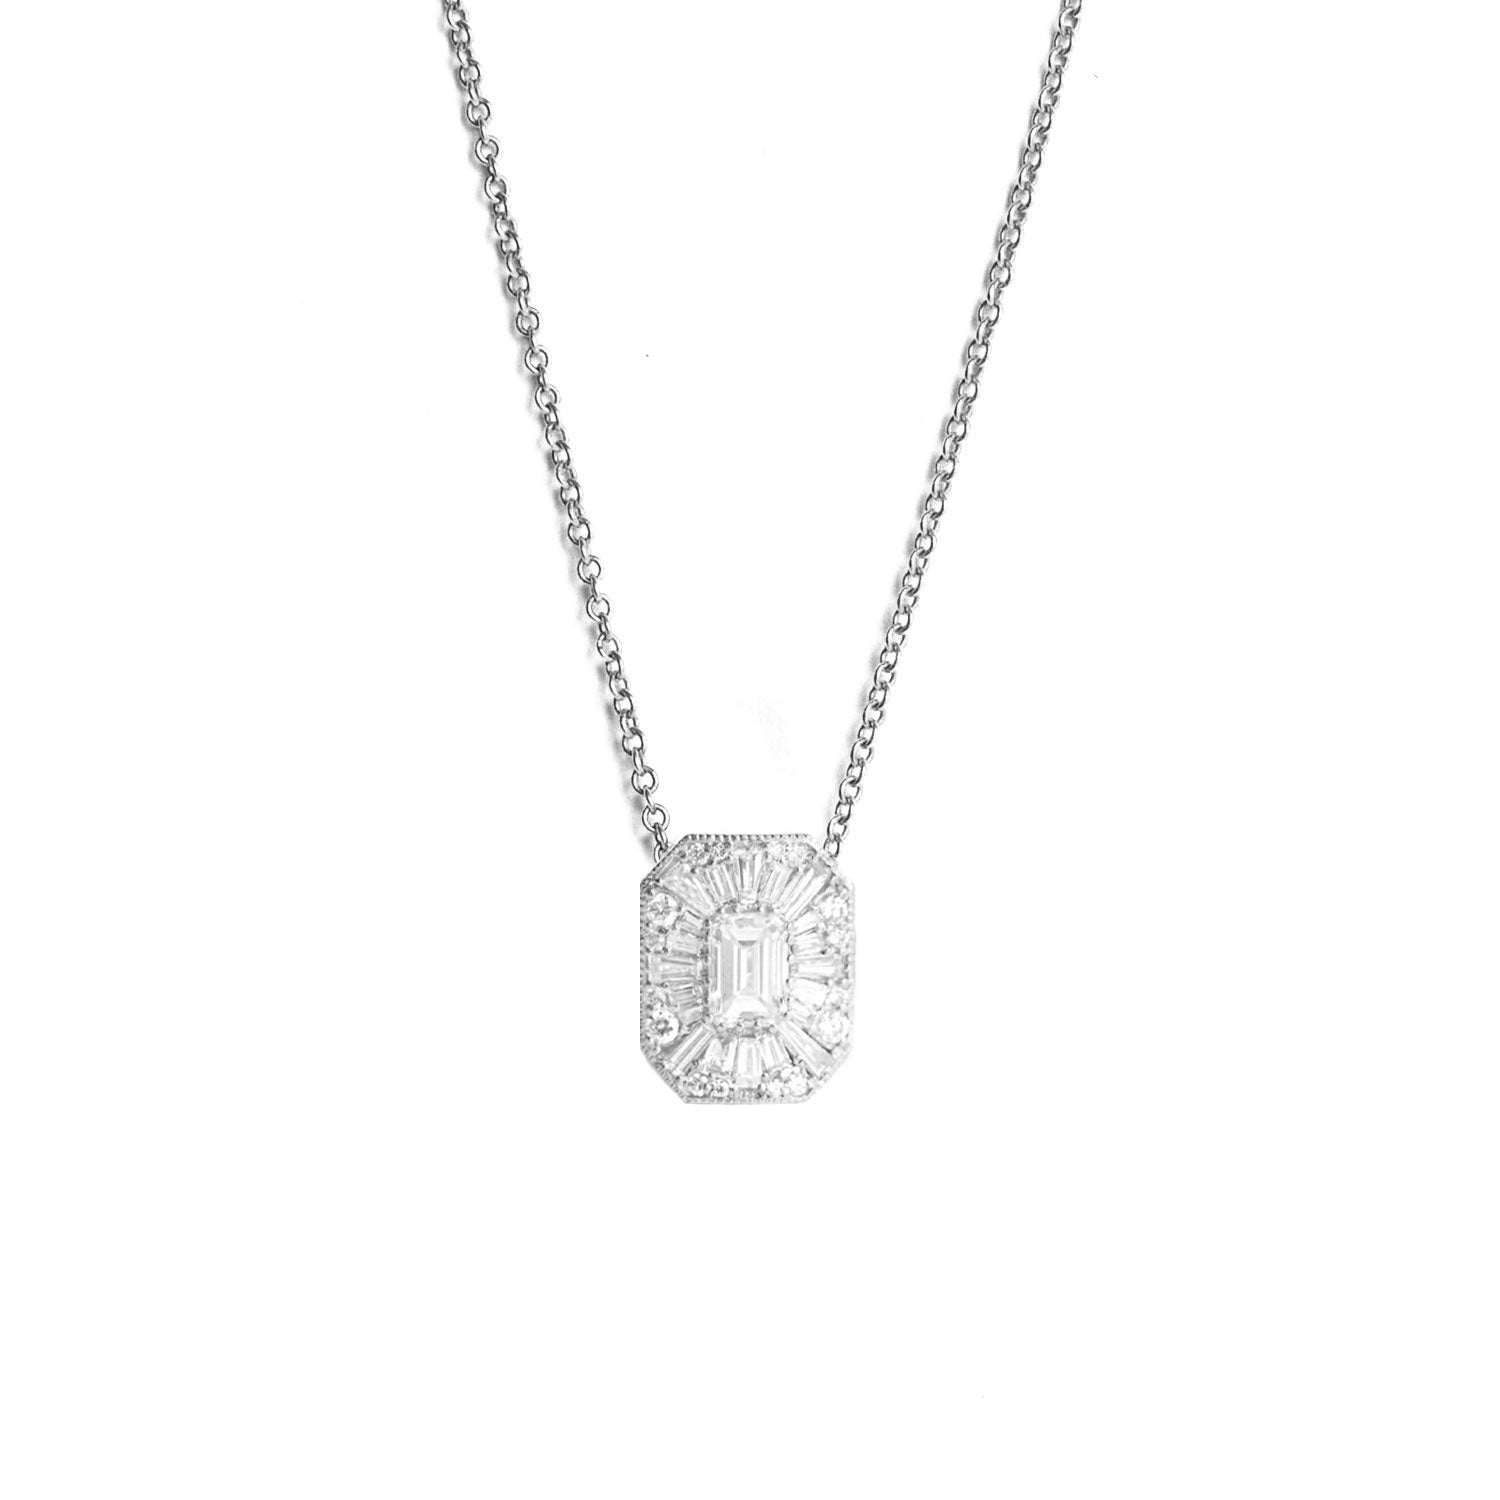 Mini prong set emerald cut diamond necklace by Lizzie Mandler | Finematter